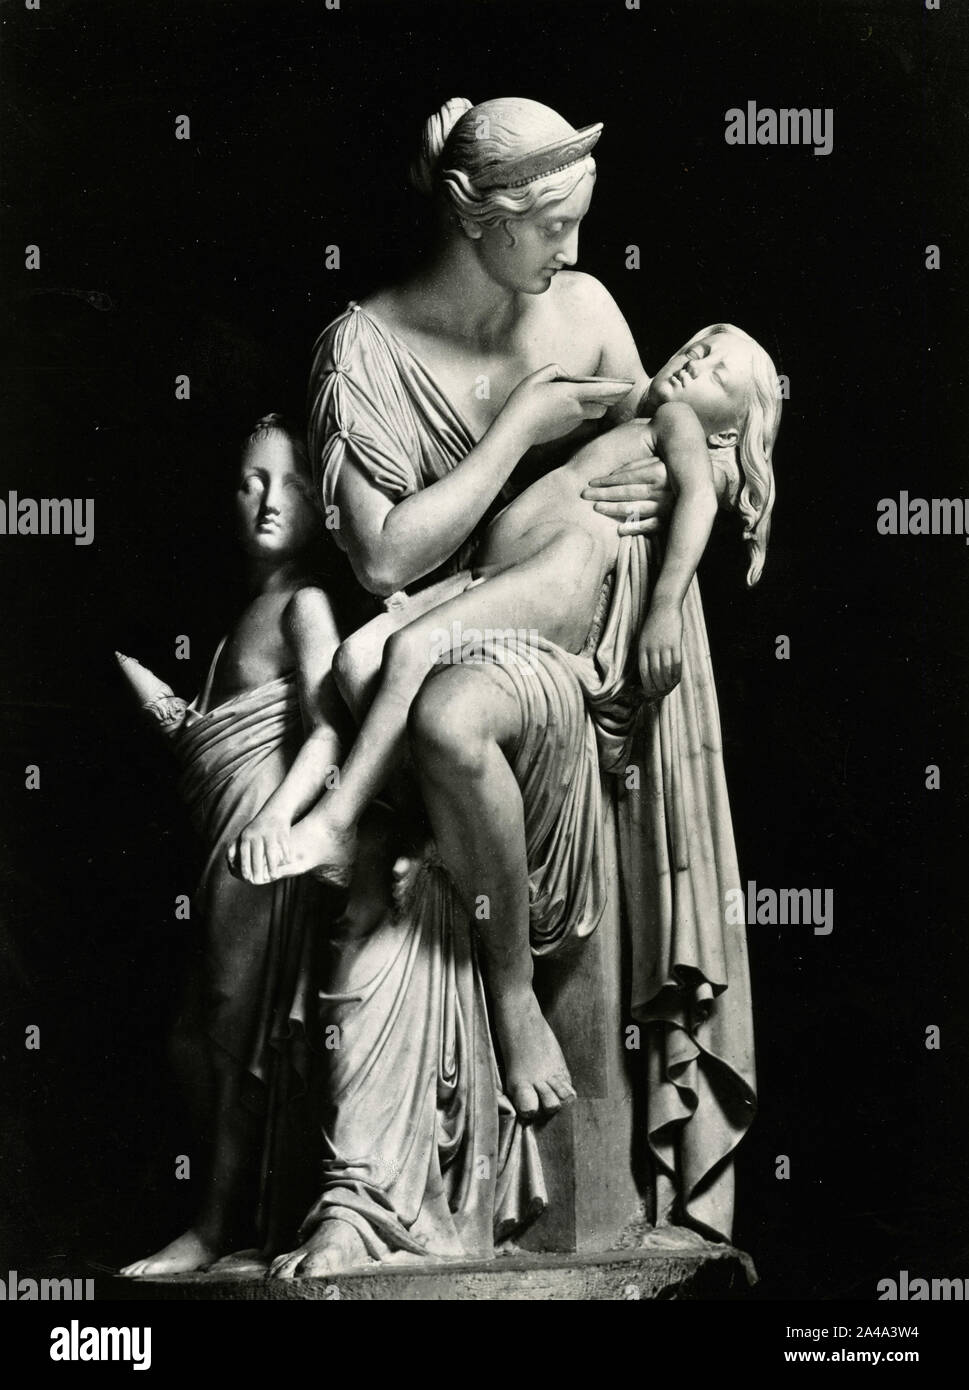 La misericordia, el detalle de la escultura del monumento a Nikolai Demidoff, Florencia, Italia 1930 Foto de stock